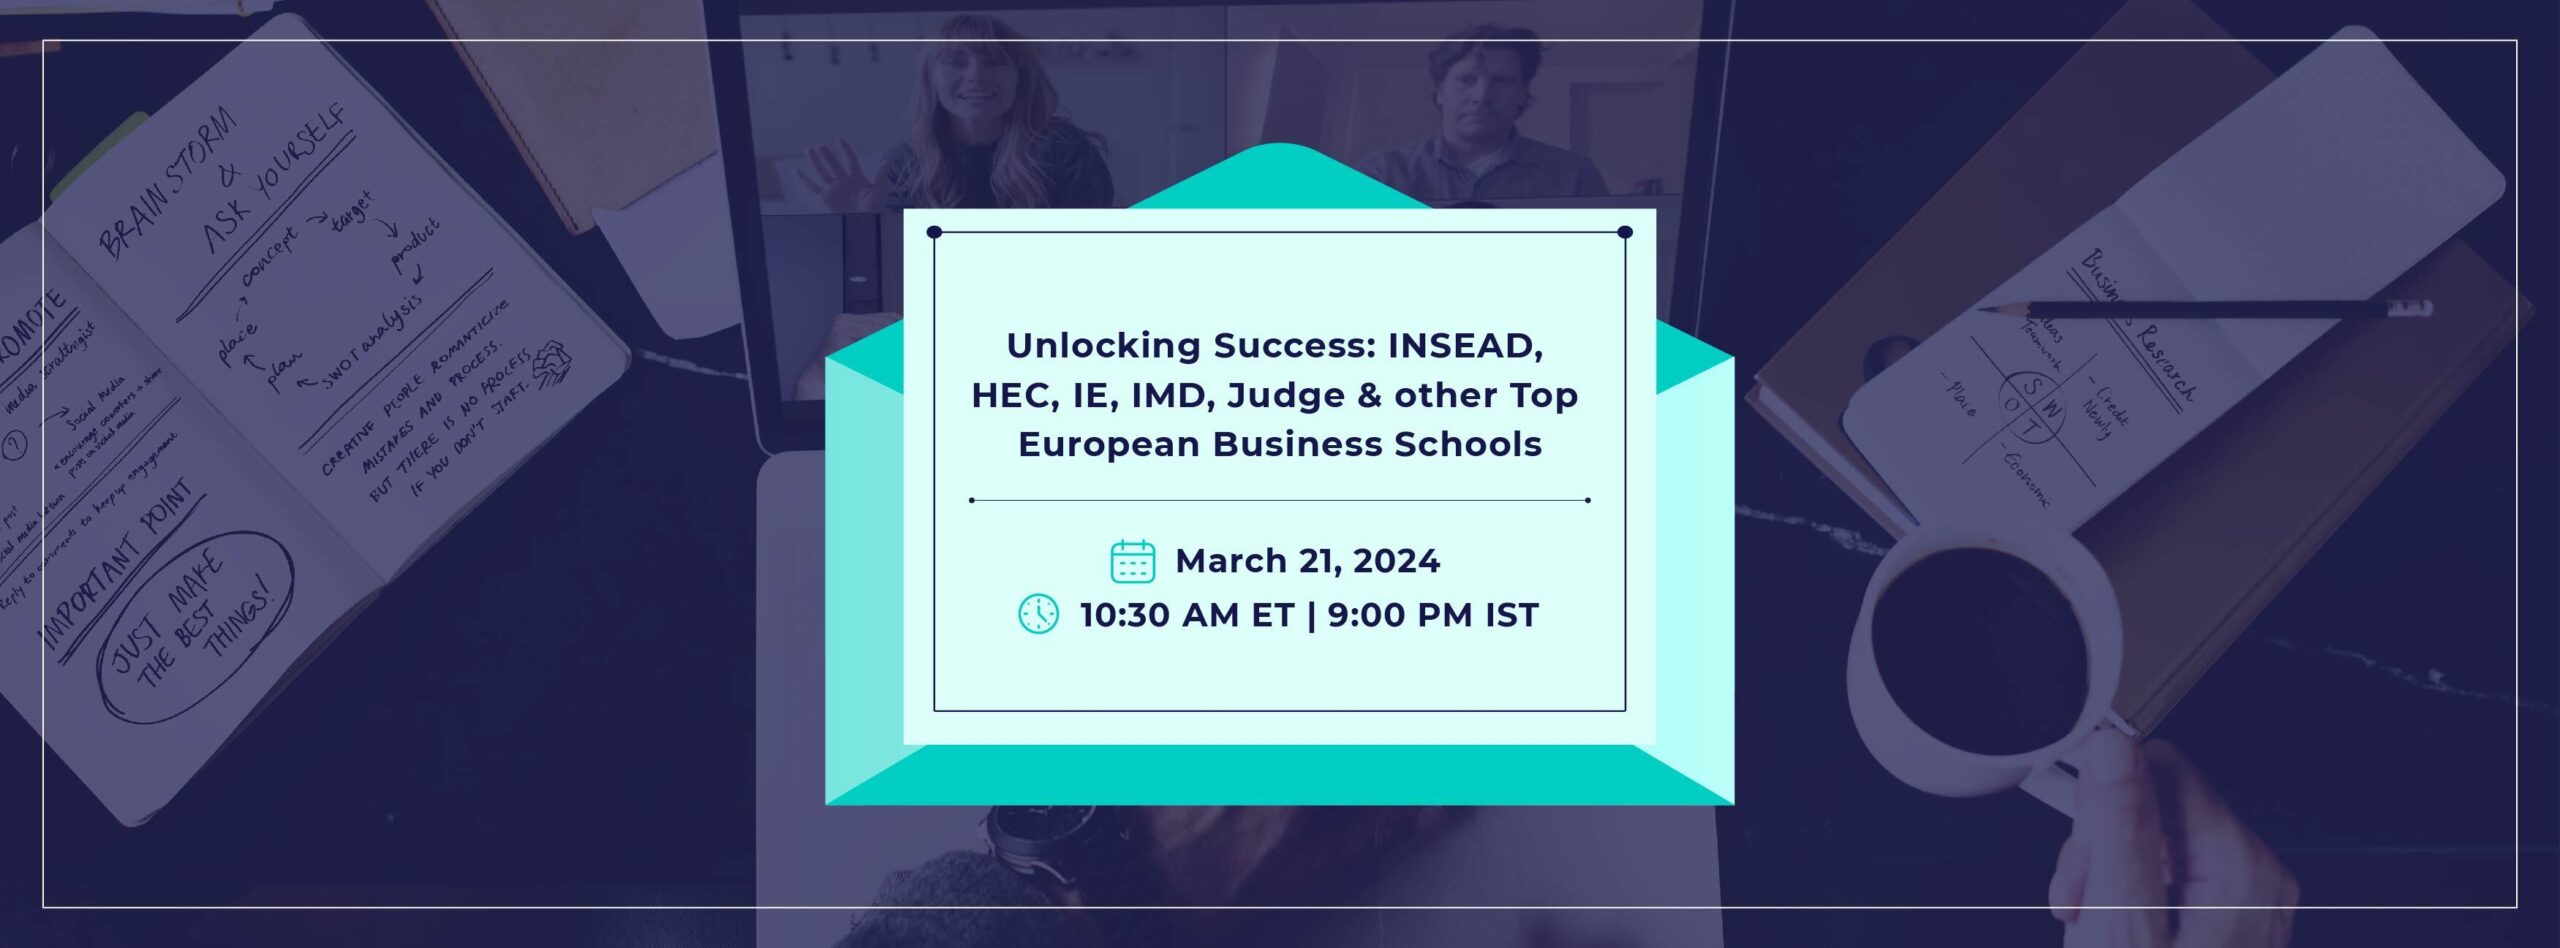 Unlocking Success: INSEAD, HEC, IE, IMD, Judge & other Top European Business Schools